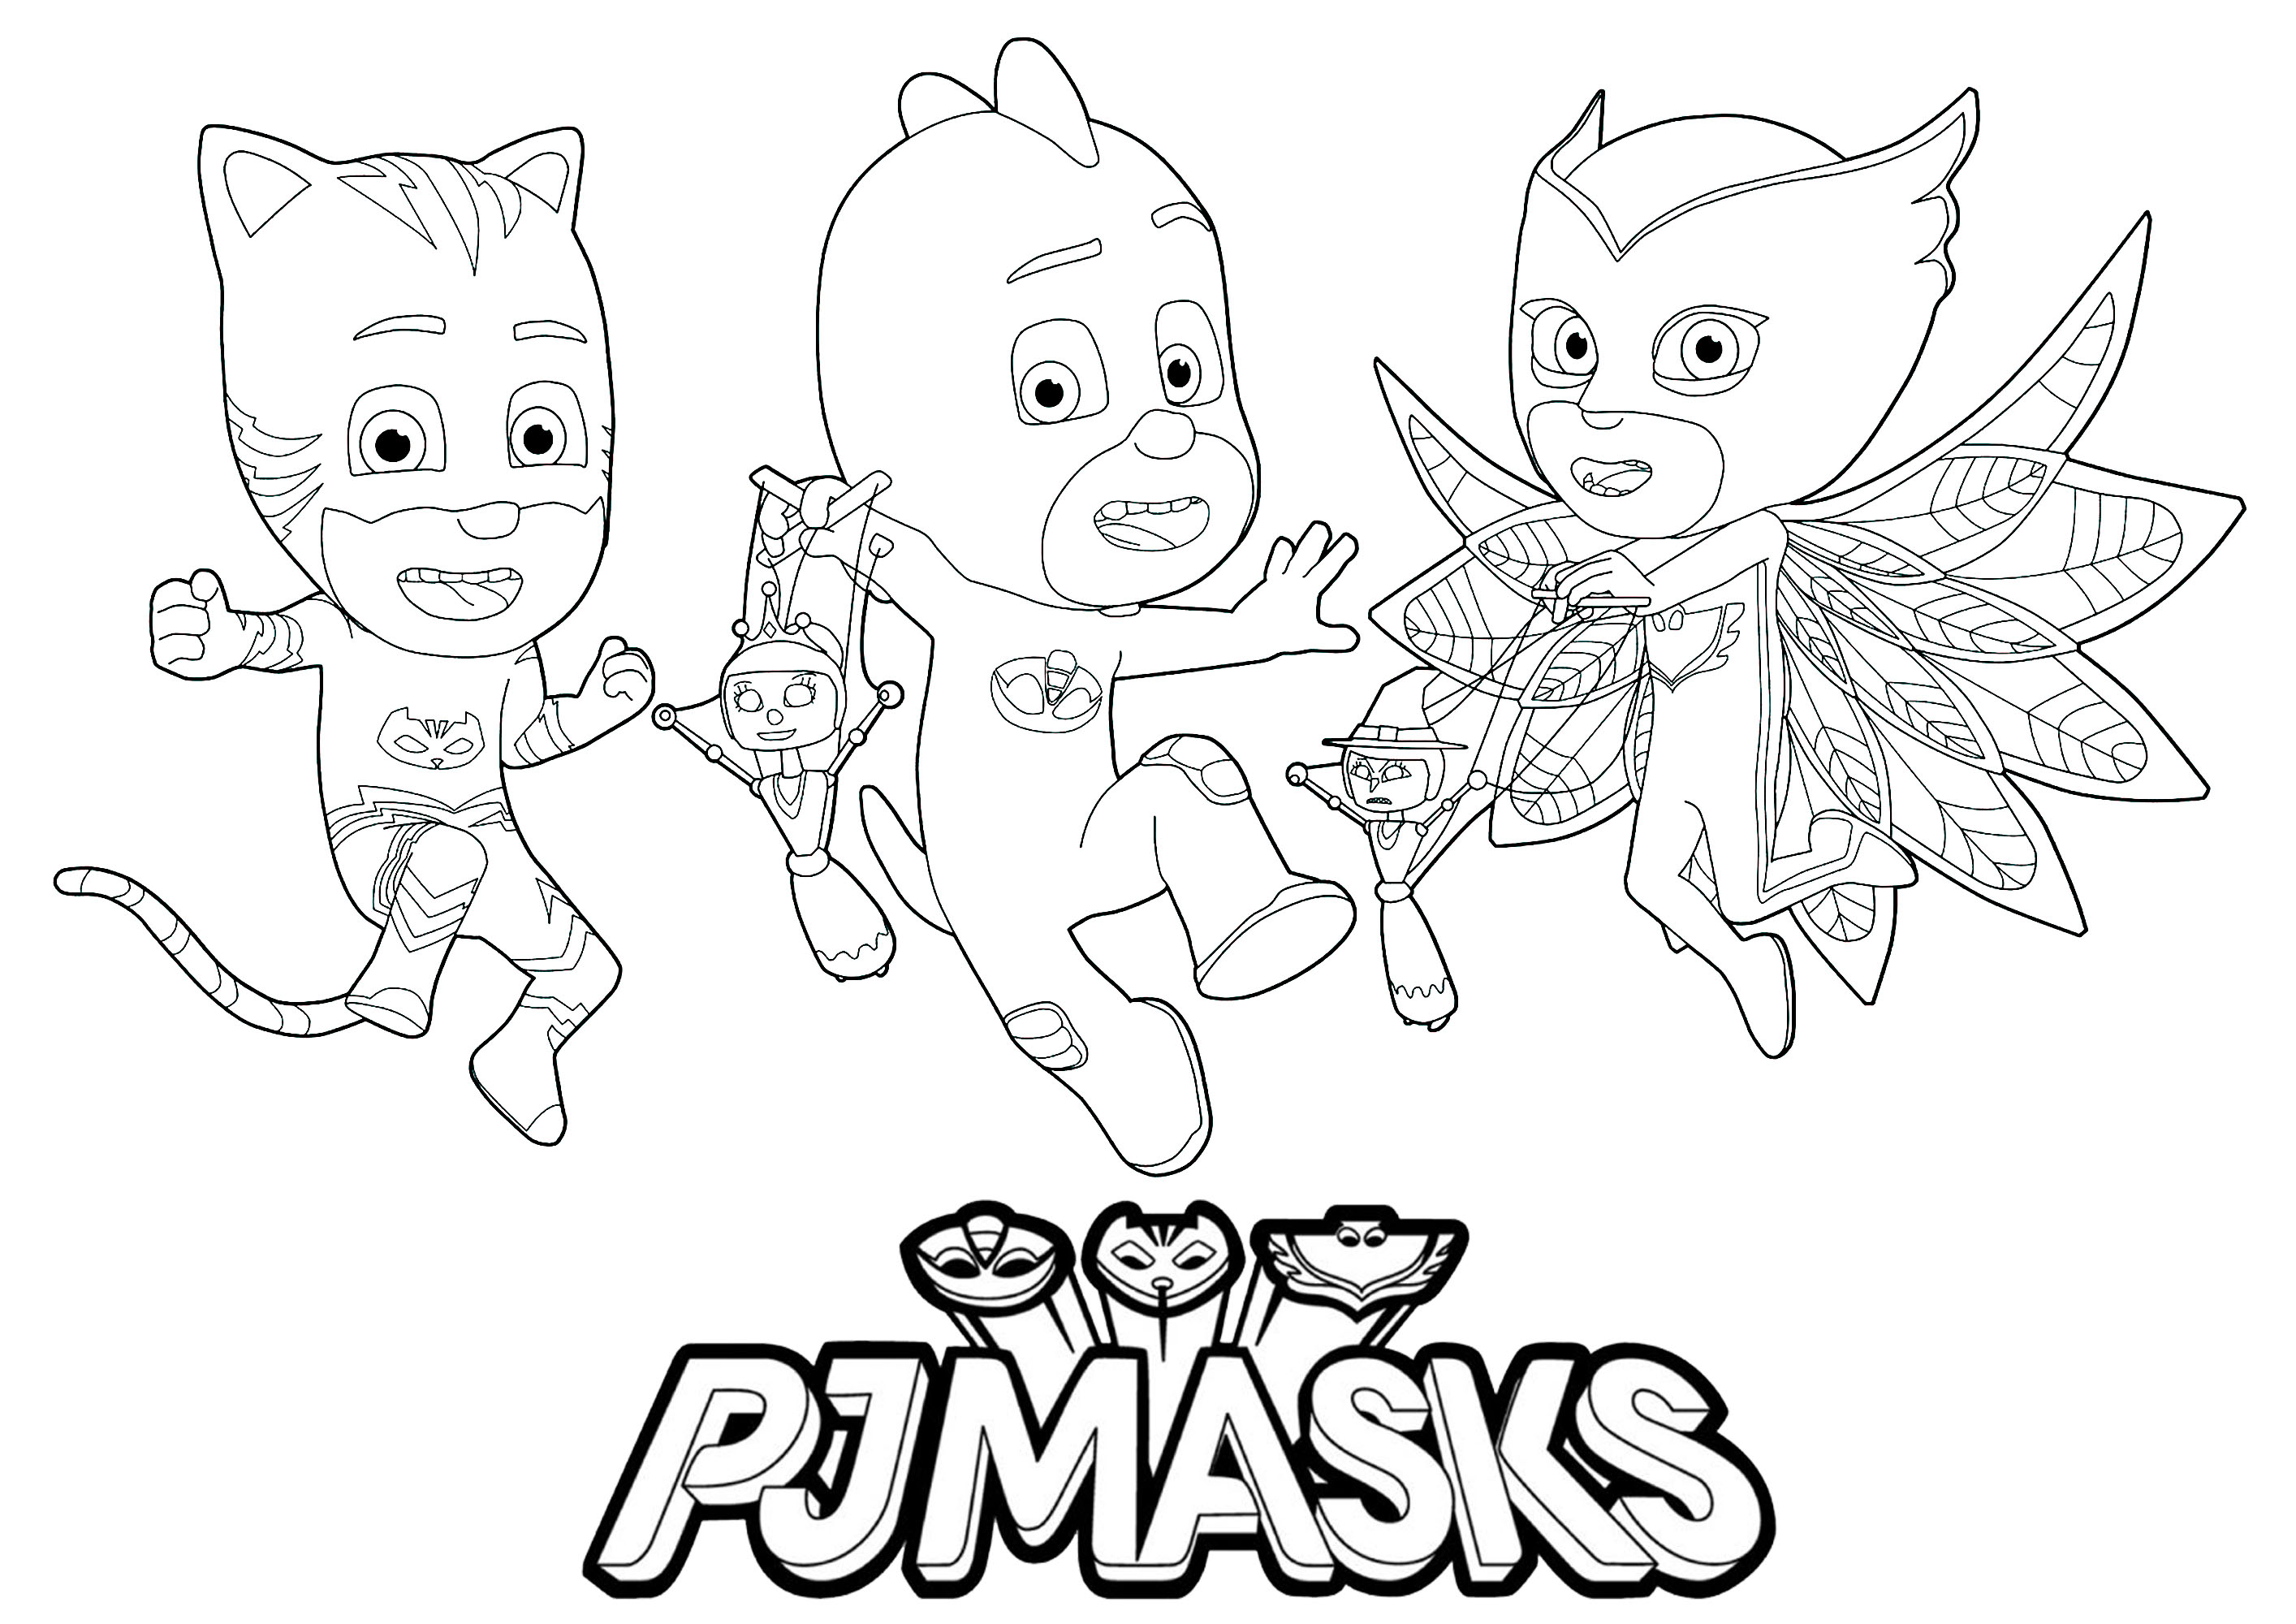 Catboy, Owlette et Gekko : 3 Super-héros de Pyjamasques  (PJ Masks)